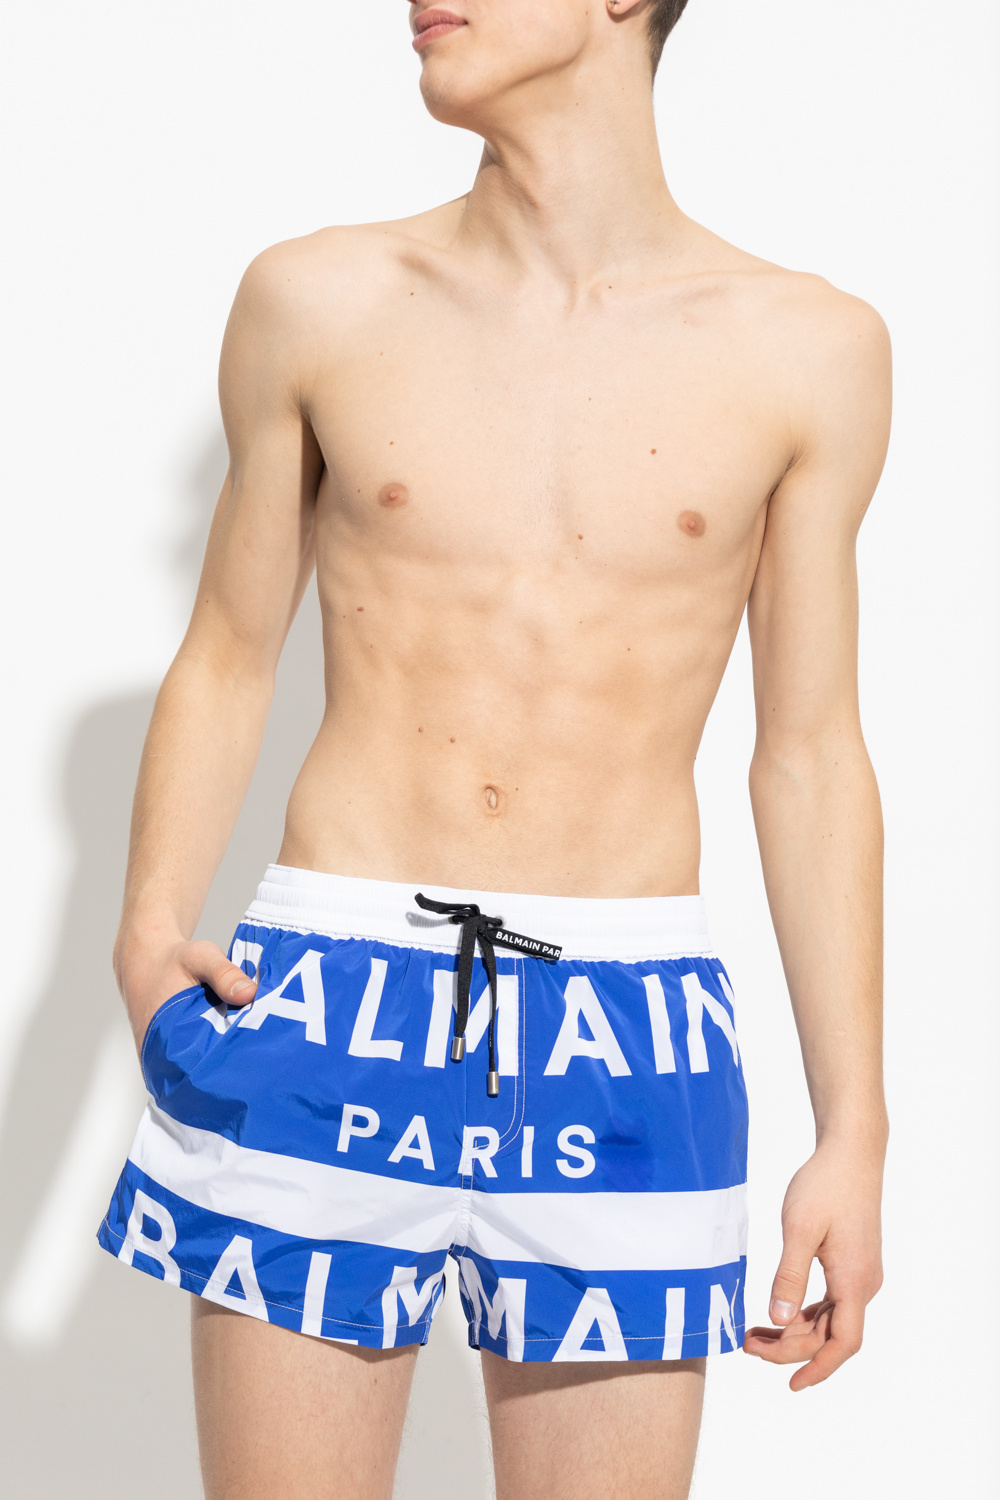 Balmain Swim shorts